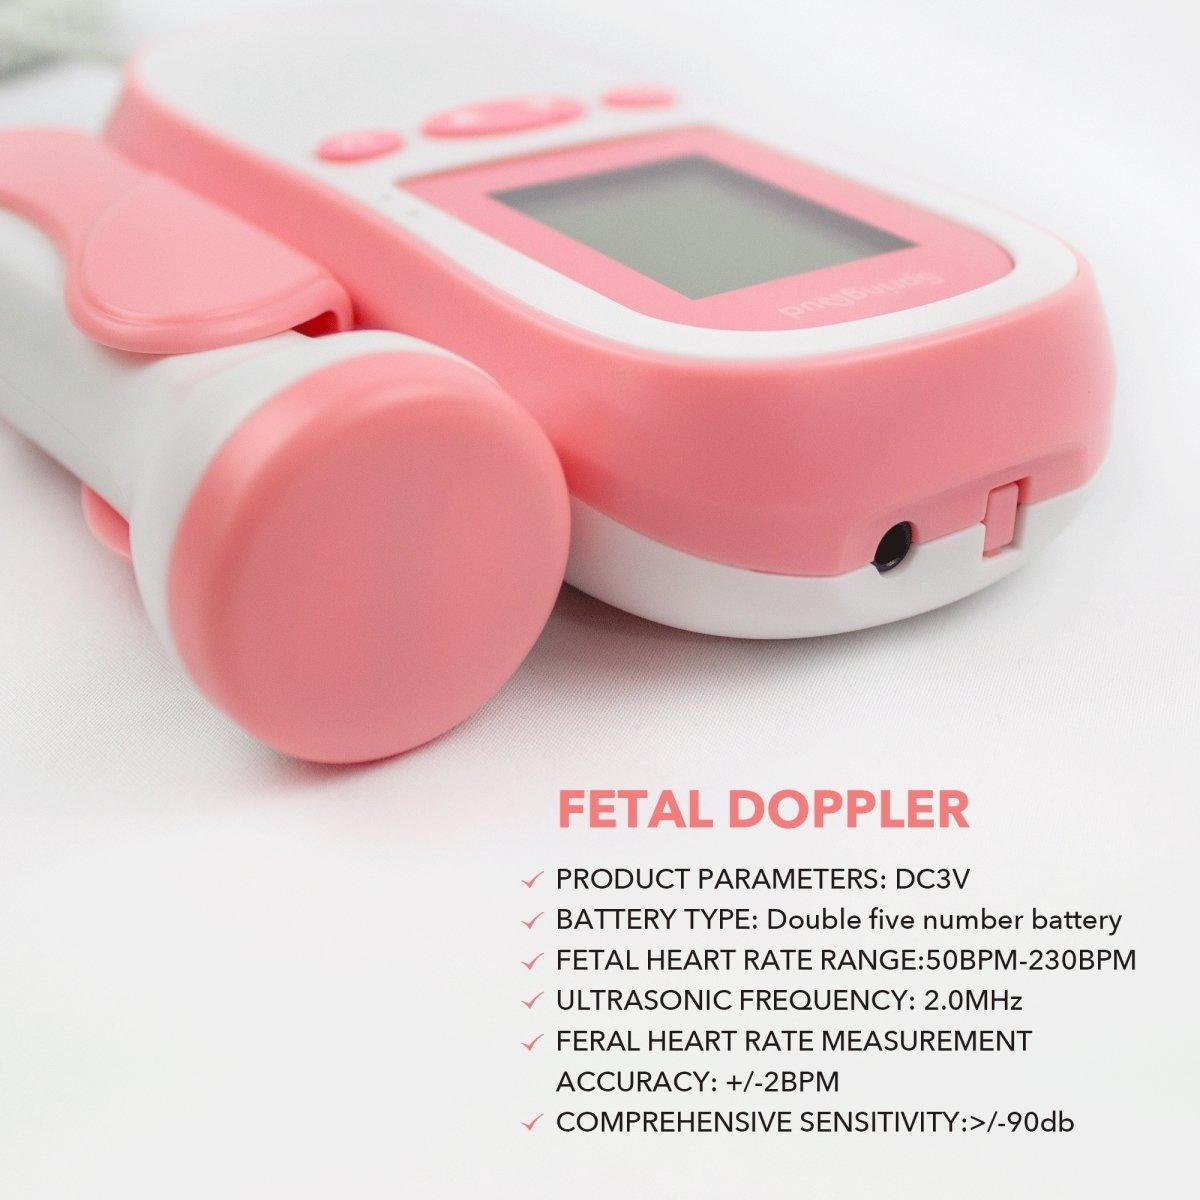 SpringBud FD 500B FDA Fetal Doppler Fedex 2 Day Shipping - SpringBud